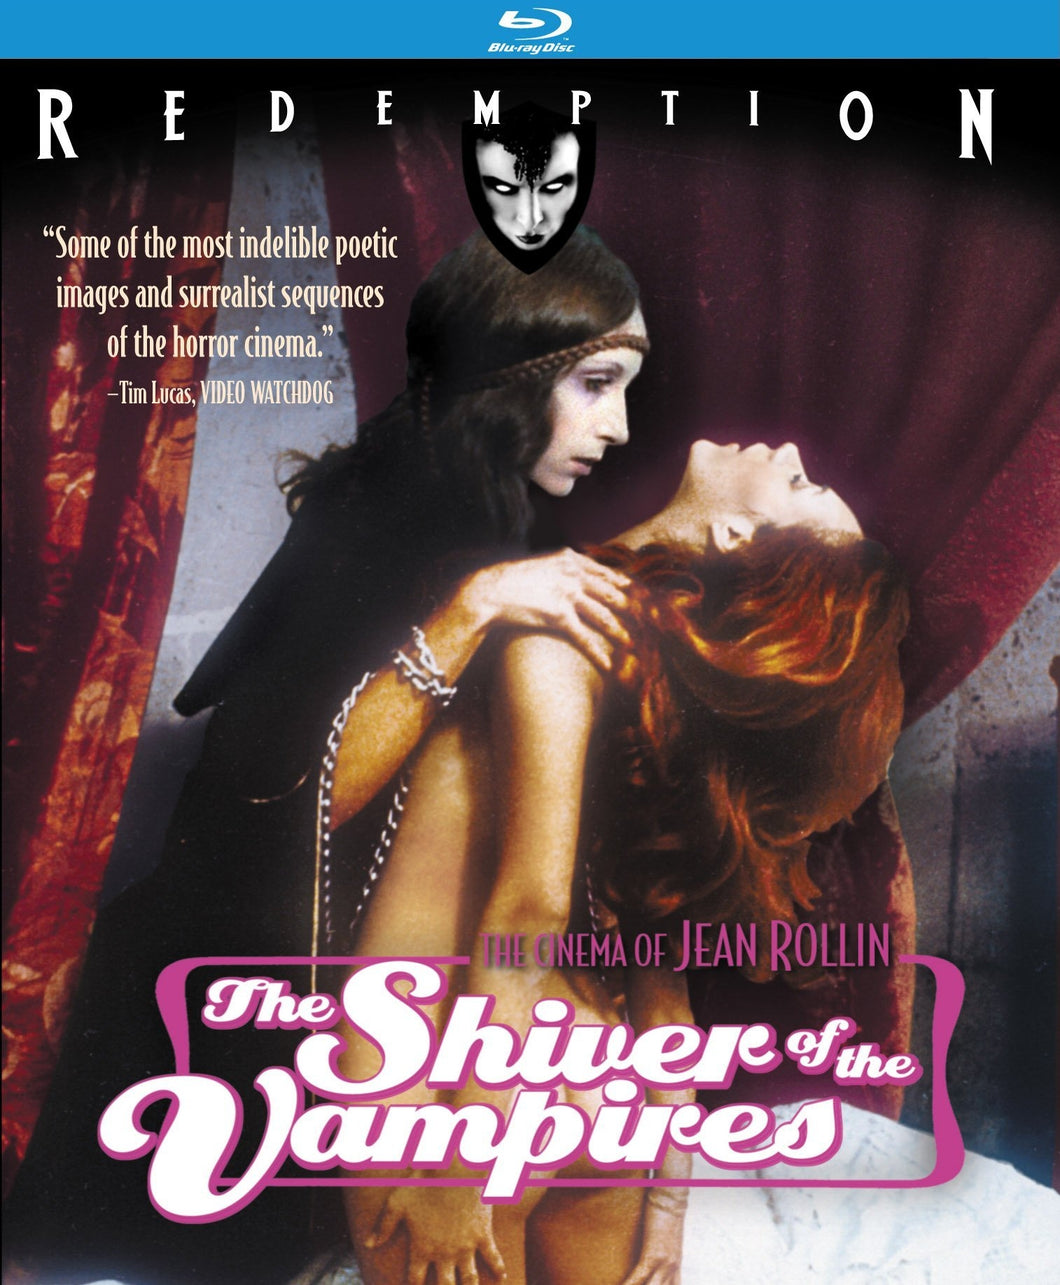 The Shiver of the Vampires (Le frisson des vampires) (1971) de Jean Rollin - front cover